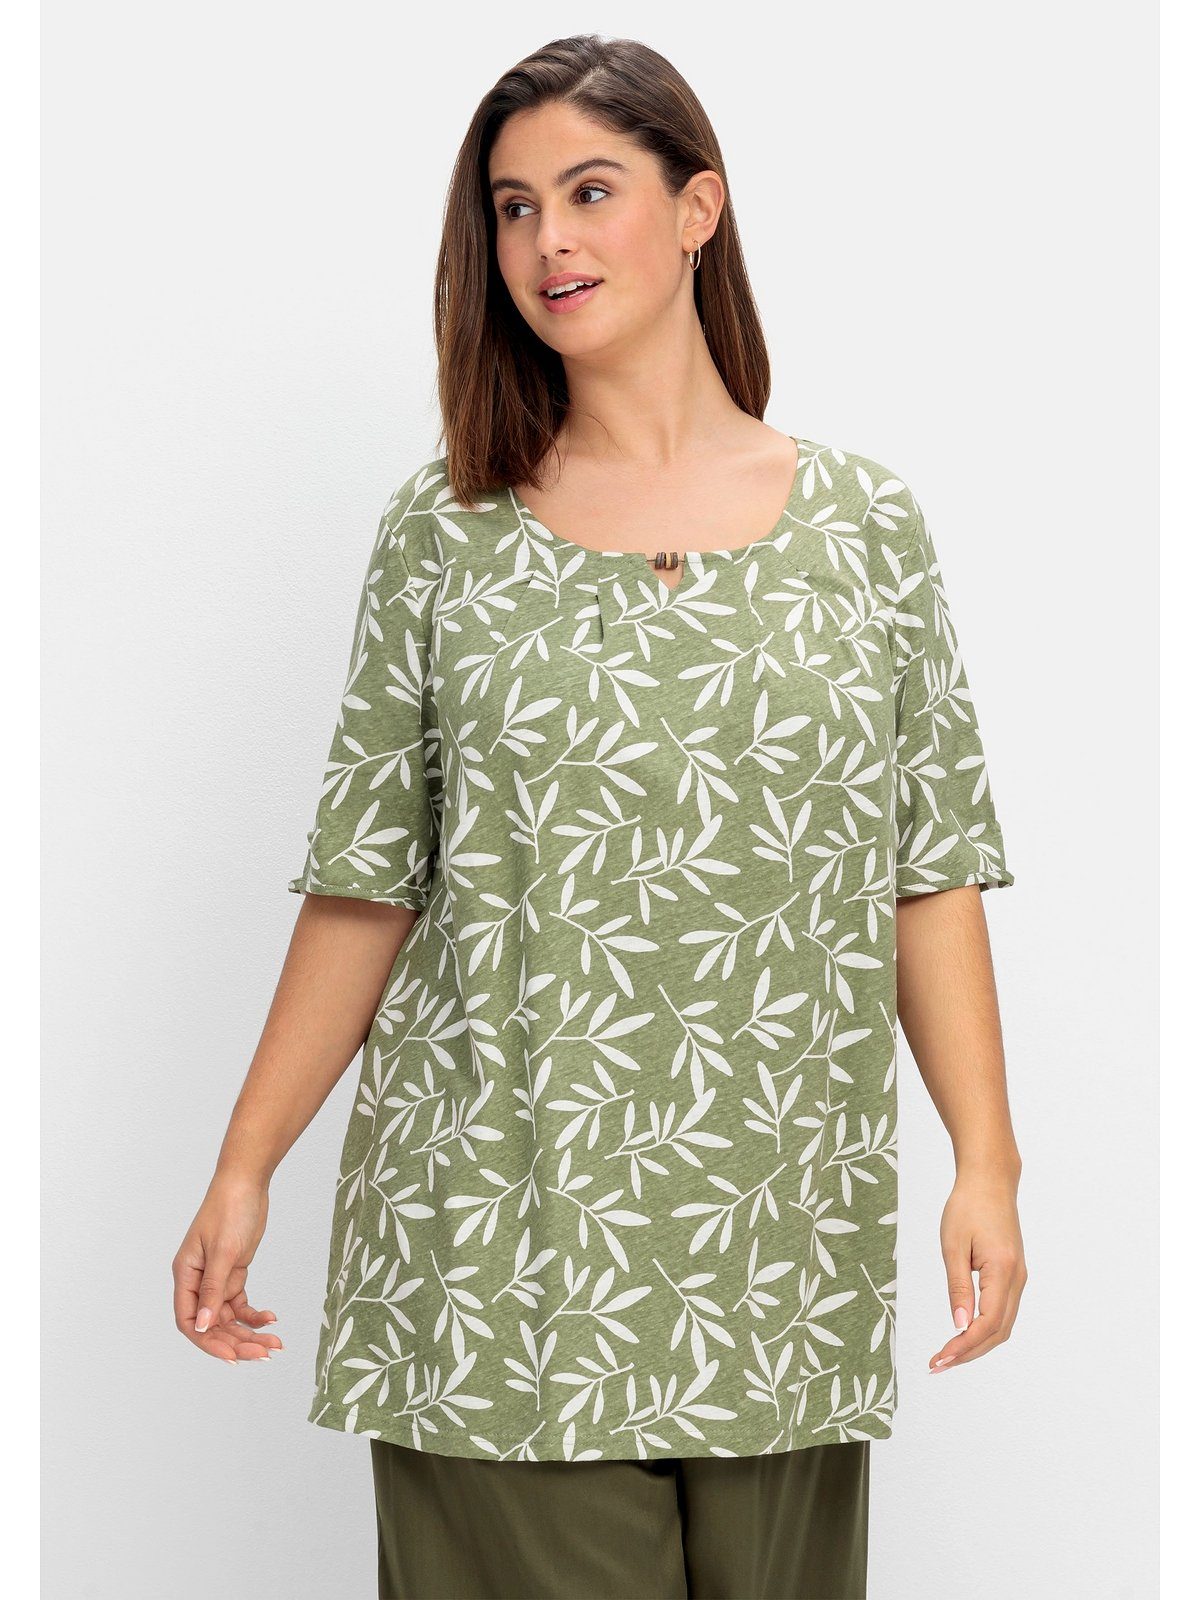 Große Größen gemustert khaki T-Shirt mit Leinen-Mix im Sheego Blätterprint,